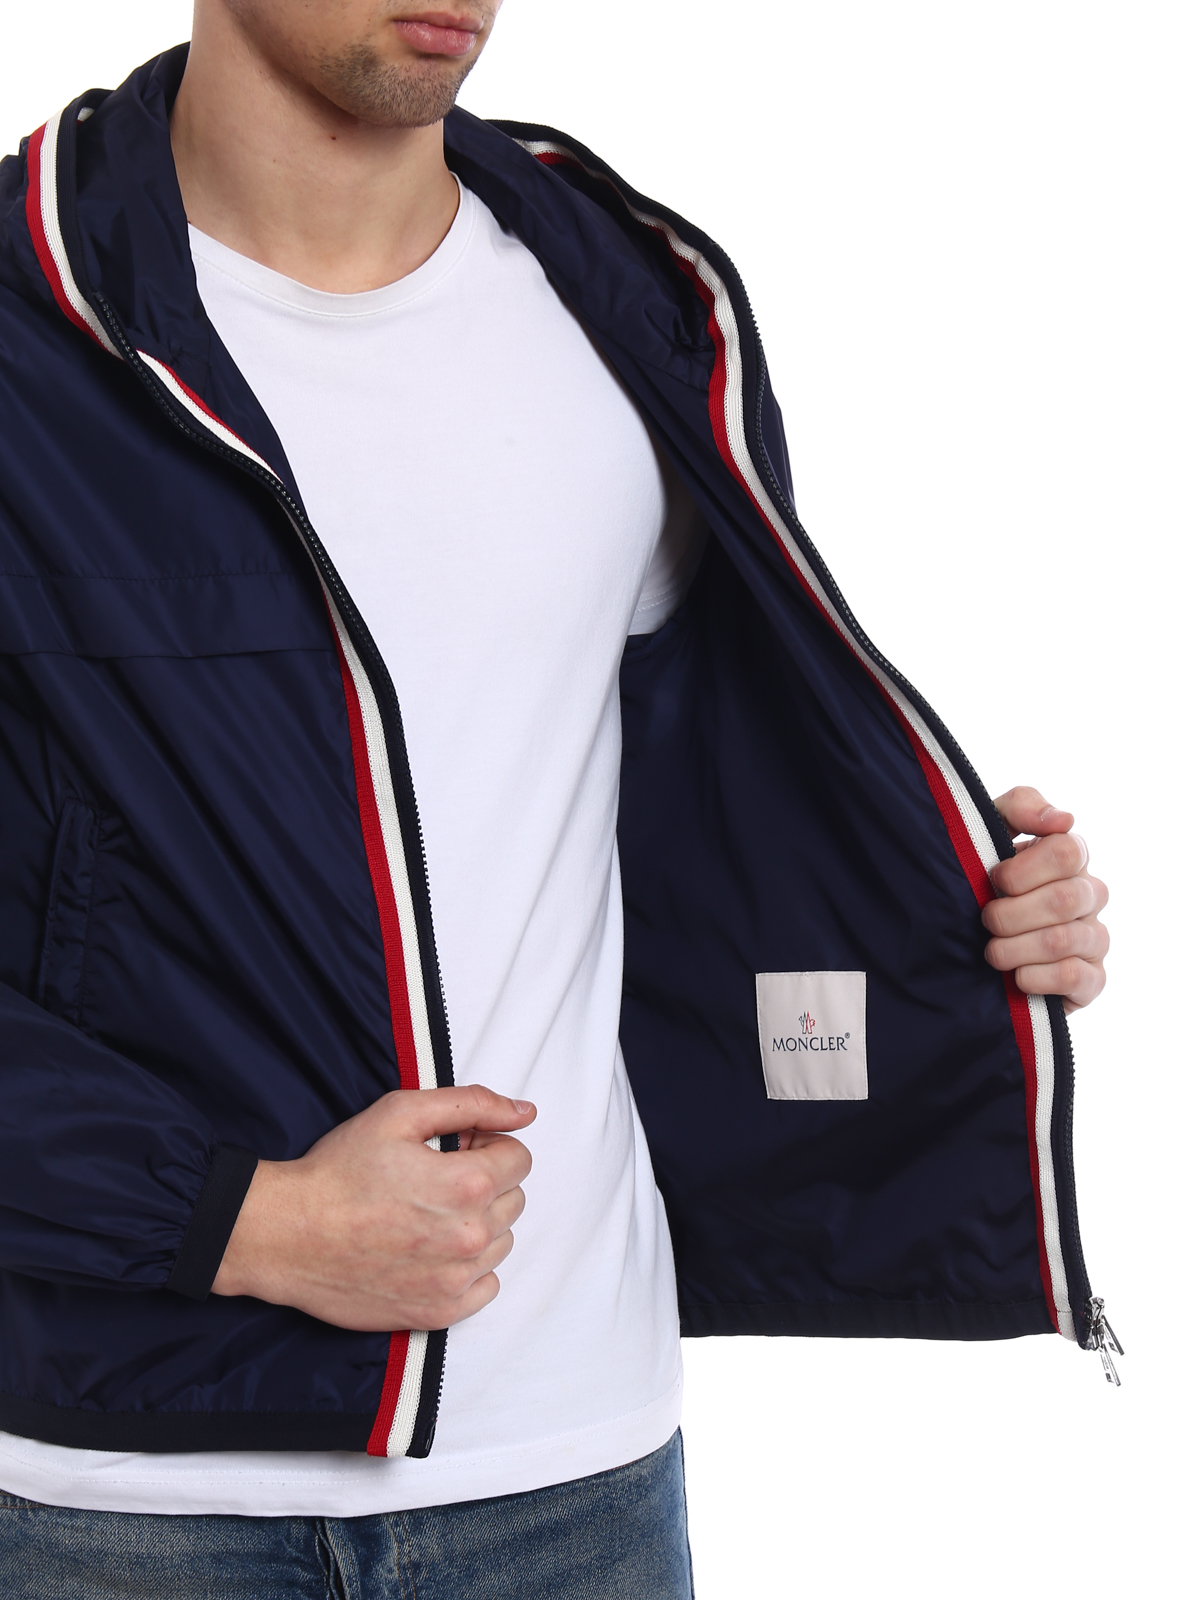 moncler anton jacket blue